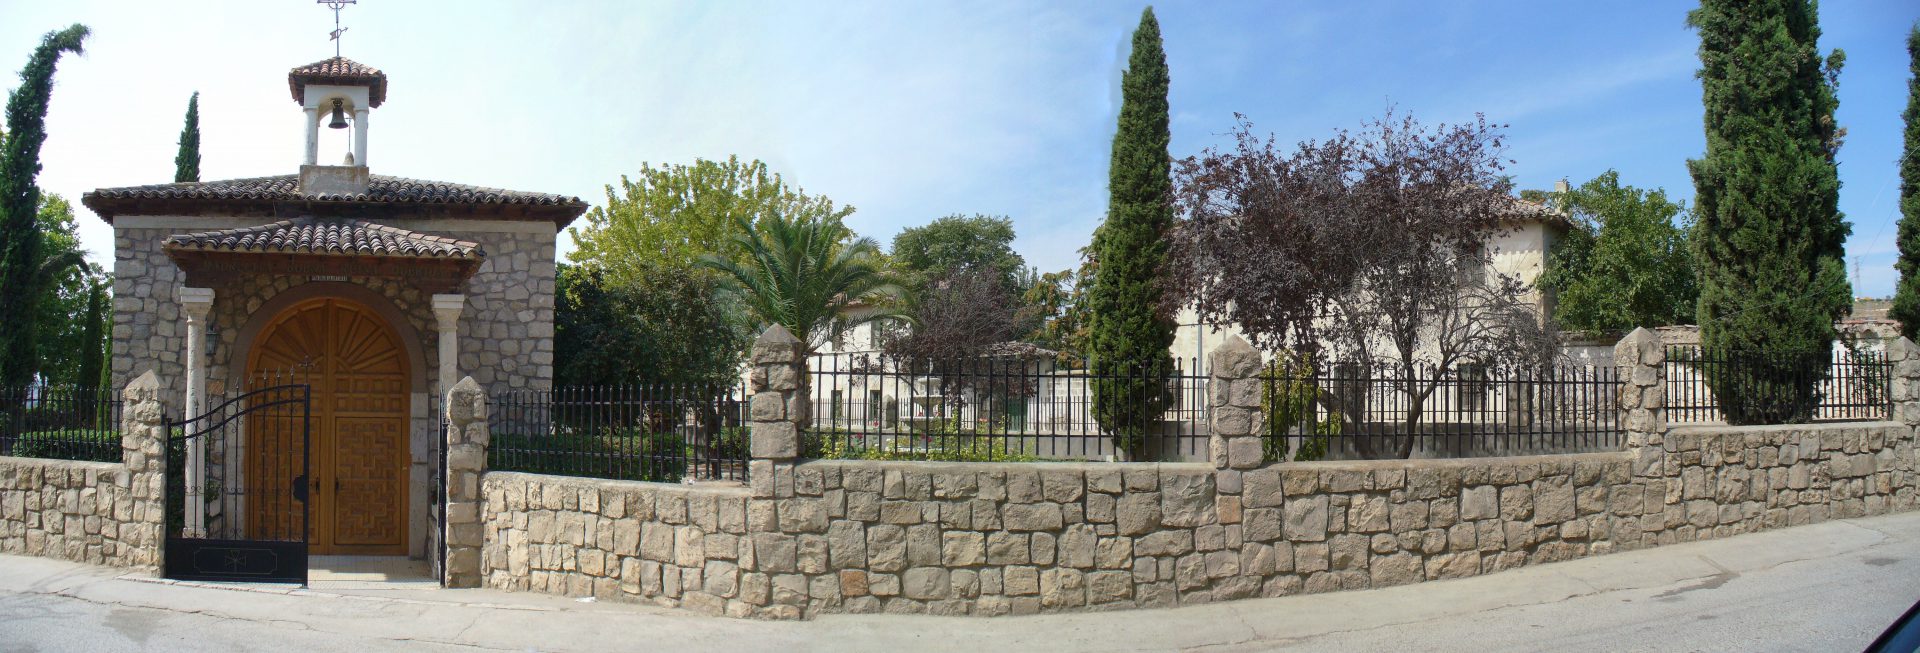 Fotos 360 Ermita de Morata de Tajuña. #VidePan por #Madrid